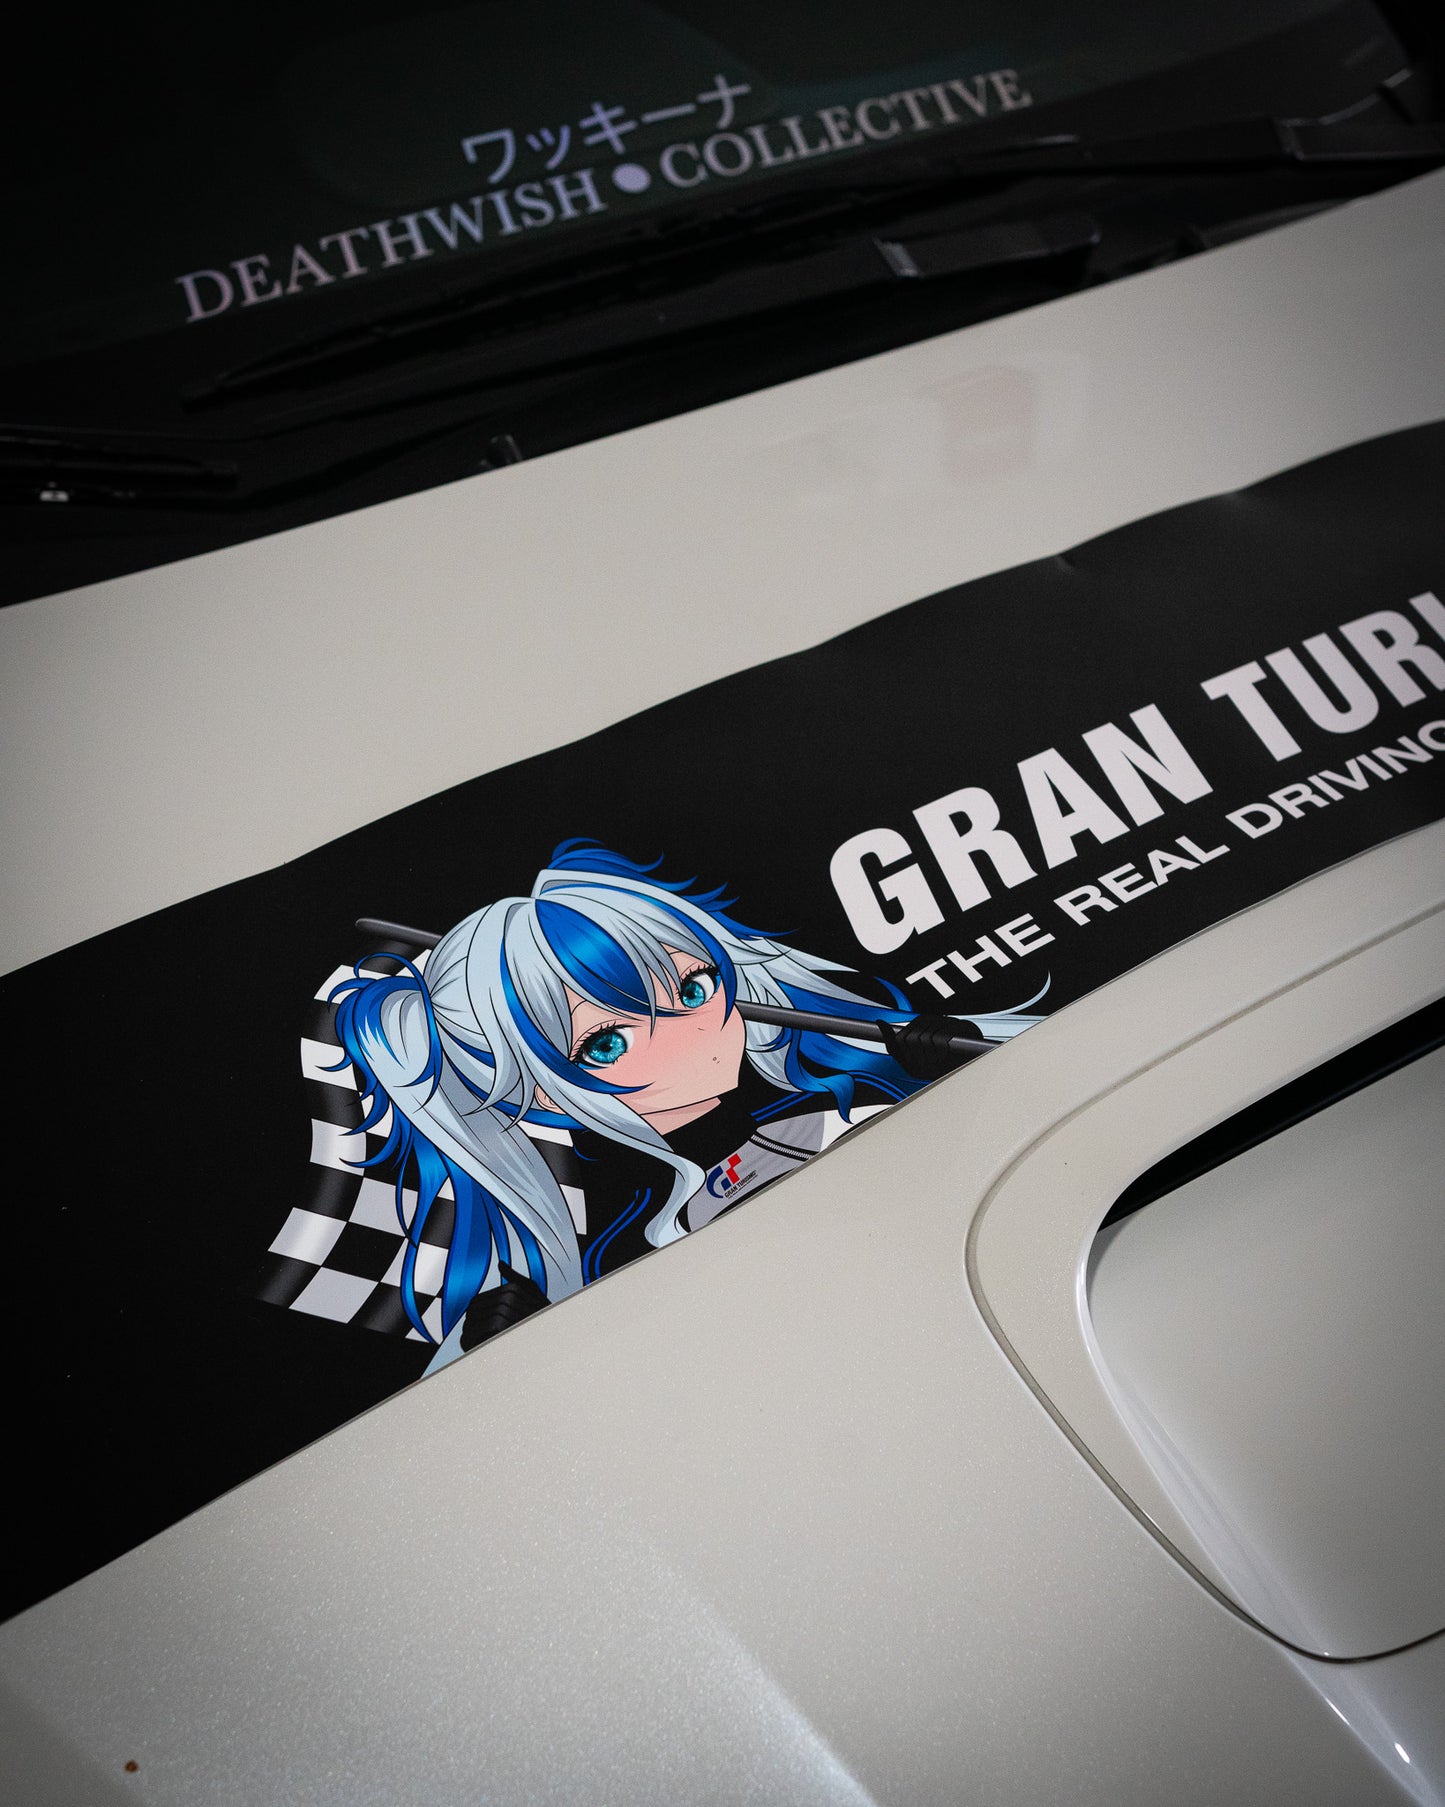 Gran Turismo Anime Banner